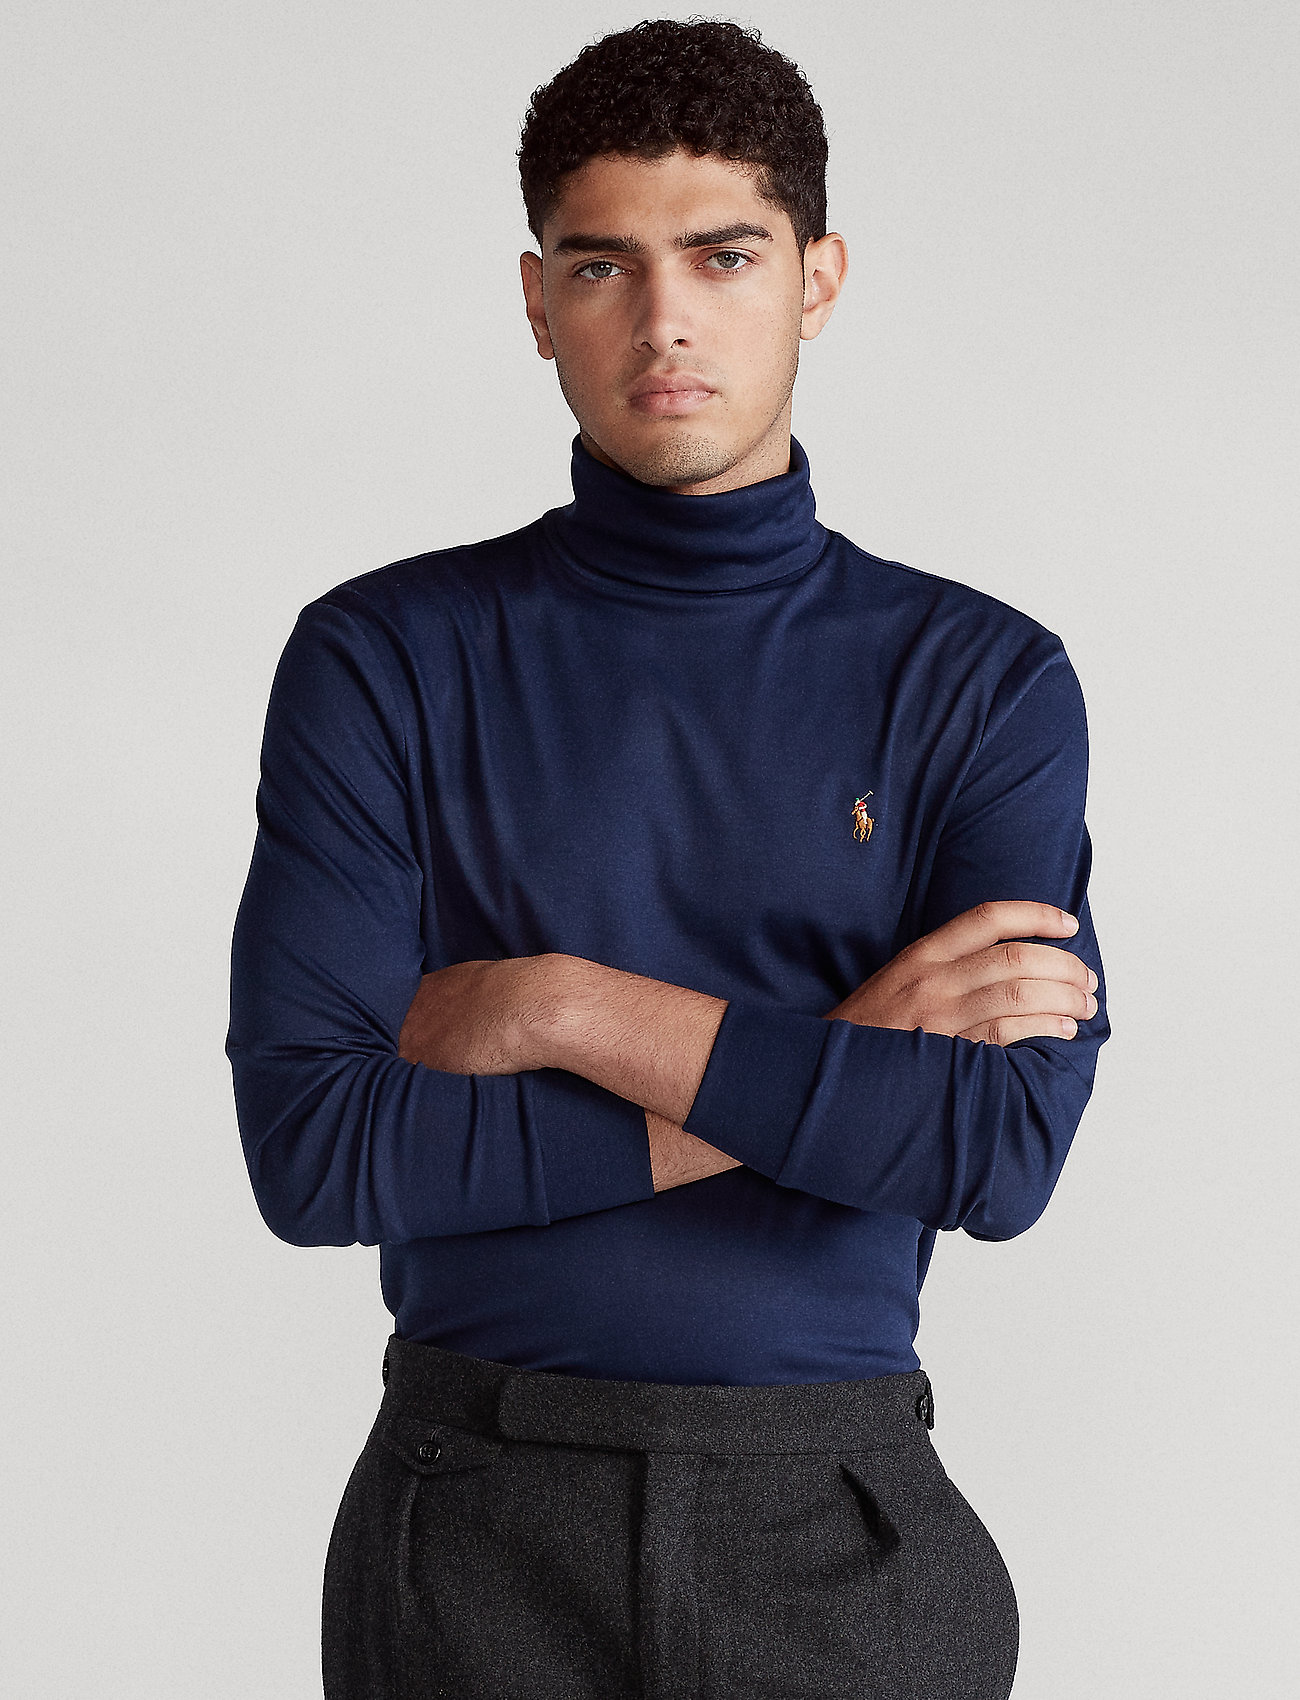 Polo Ralph Lauren - Soft Cotton Turtleneck - t-shirts - french navy - 0